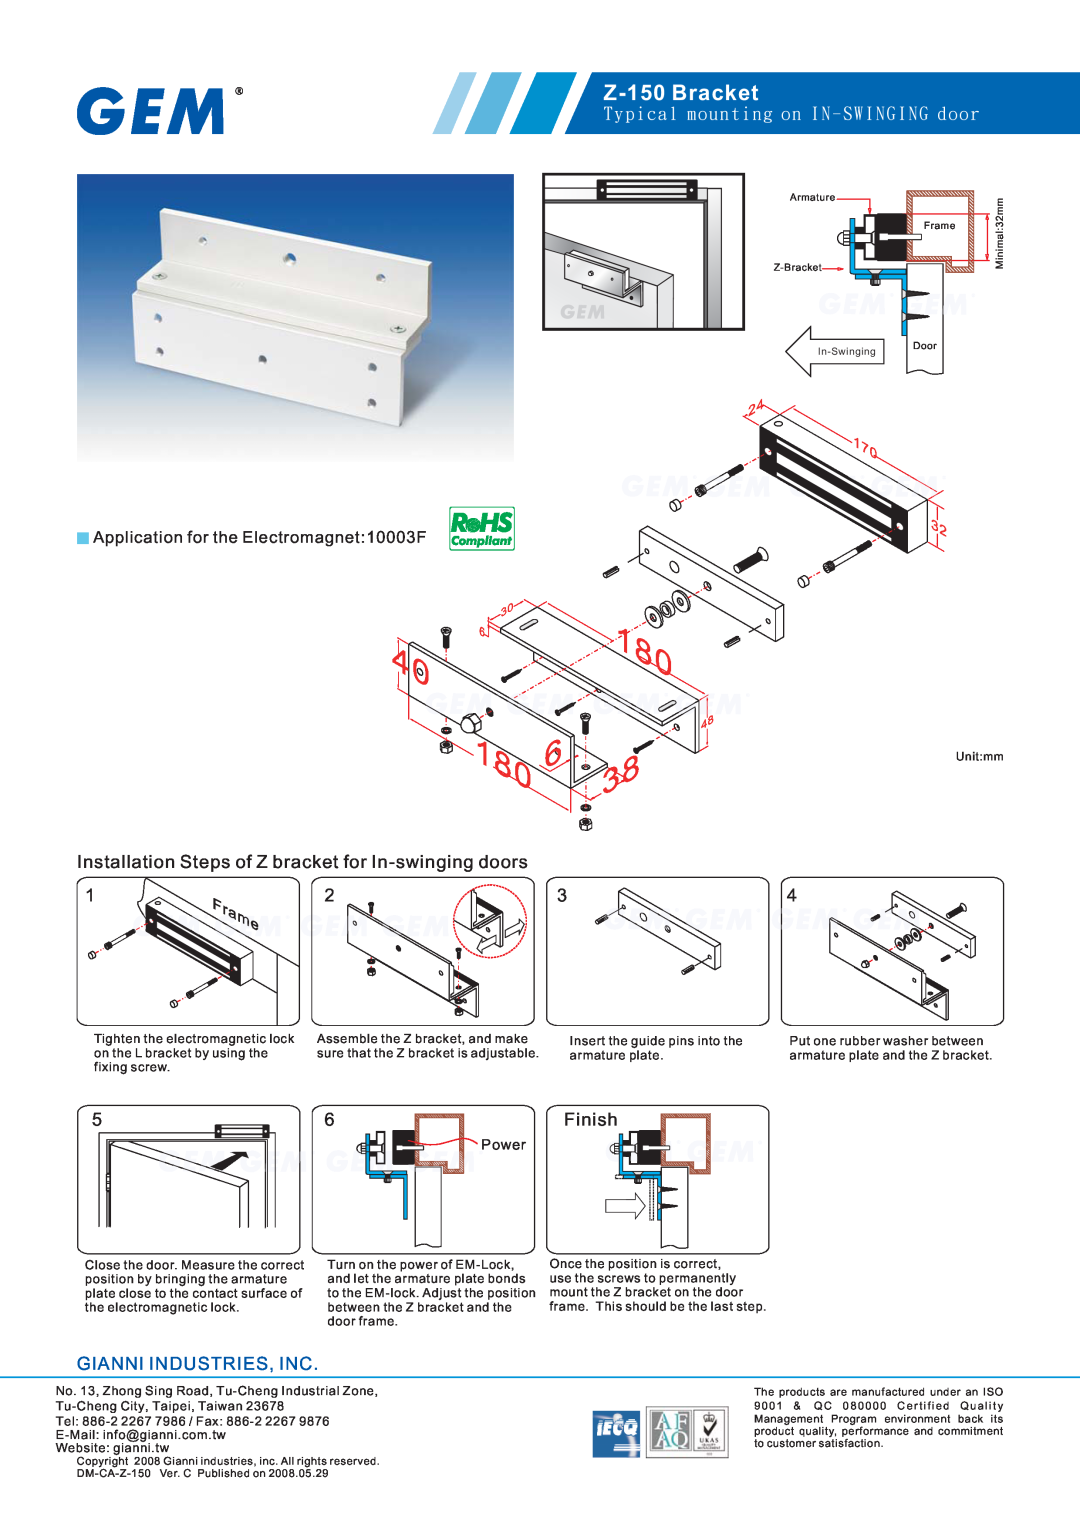 Gianni Industries manual Z-150 Bracket, Installation Steps of Z bracket for In-swinging doors, Finish, Power 